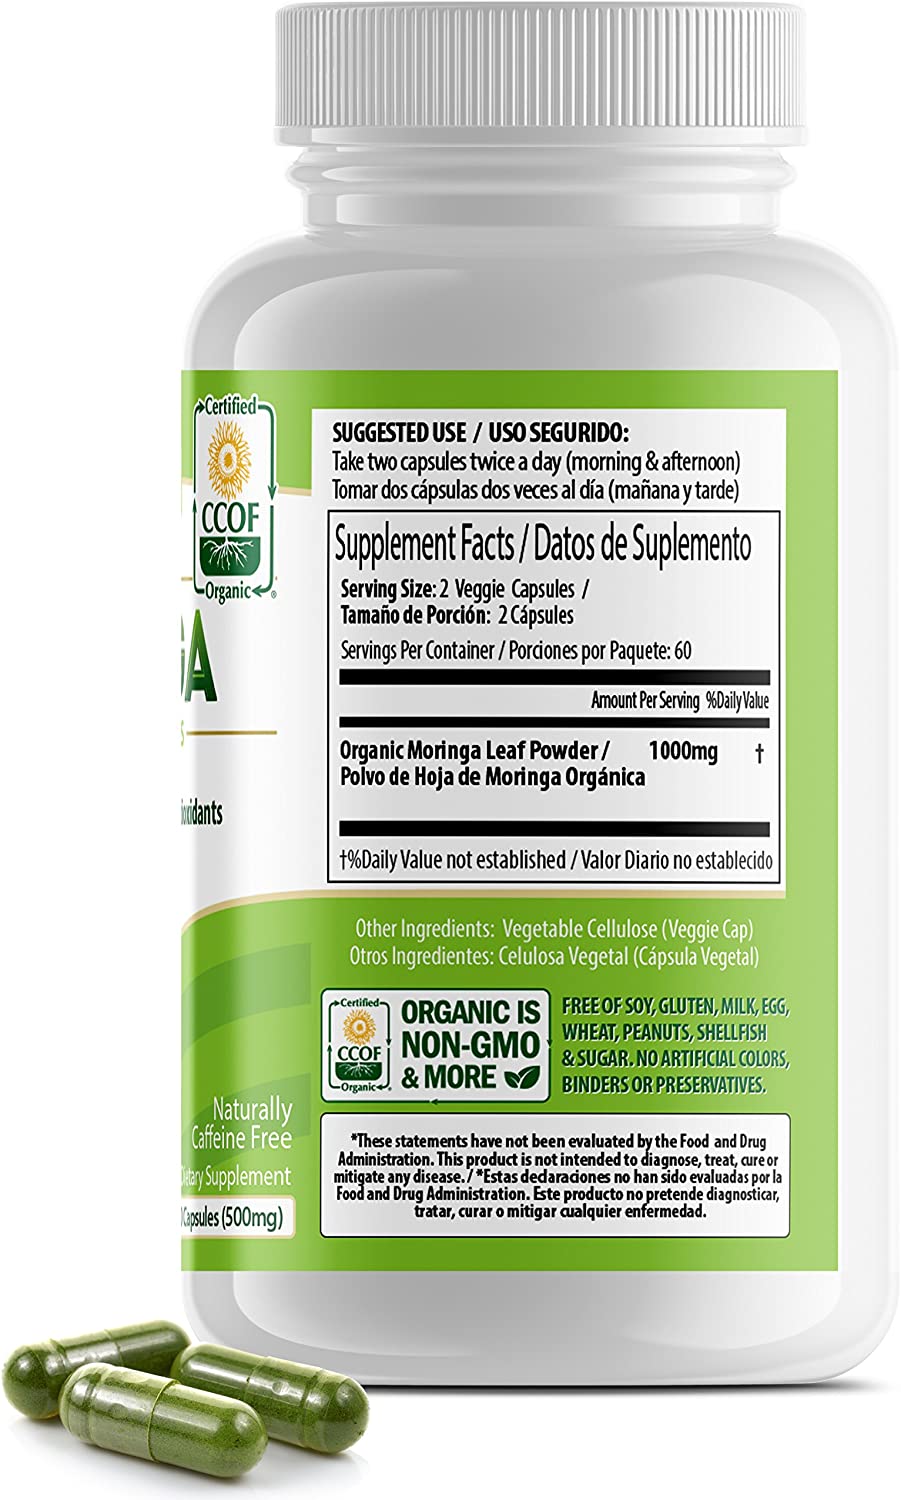 PURA VIDA MORINGA Moringa Capsules Single Origin Moringa Powder Organic. Moringa Leaf. Energy, Metabolism, & Immune Support. 120ct. 500mg Caps.